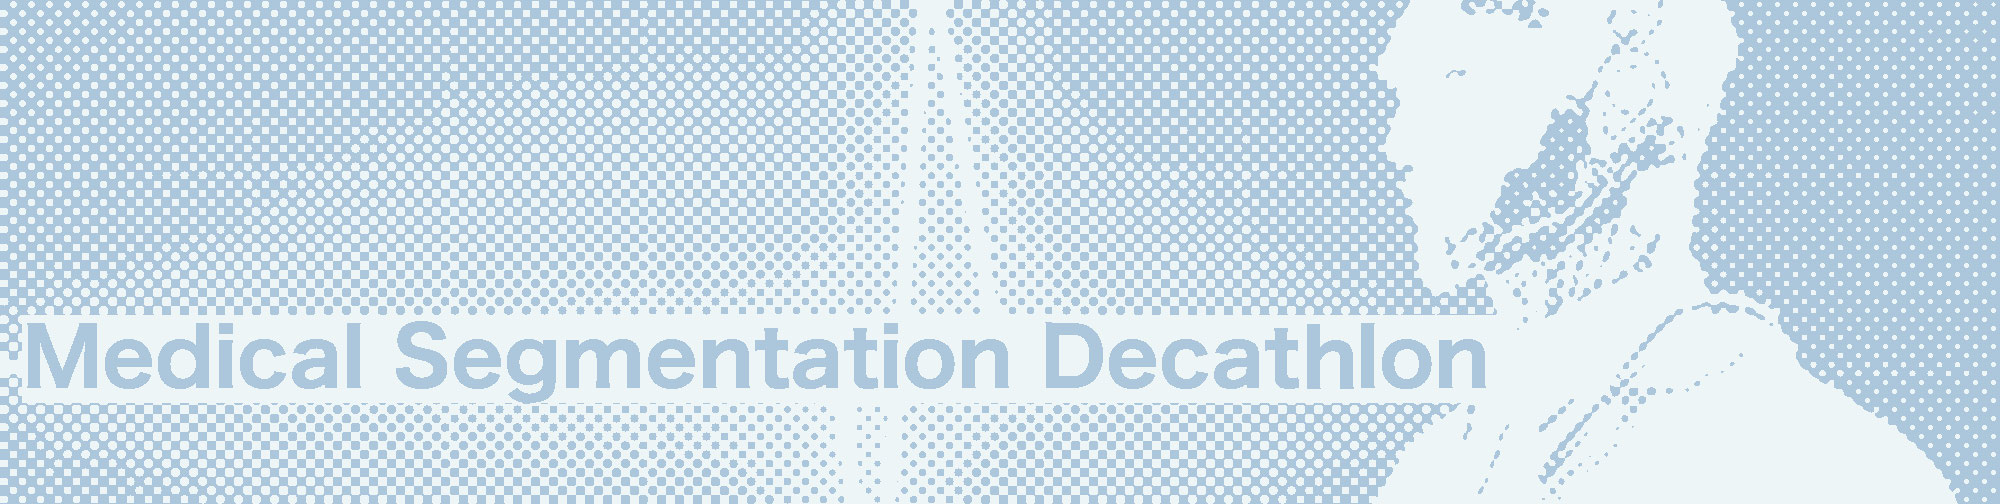 Decathlon Banner